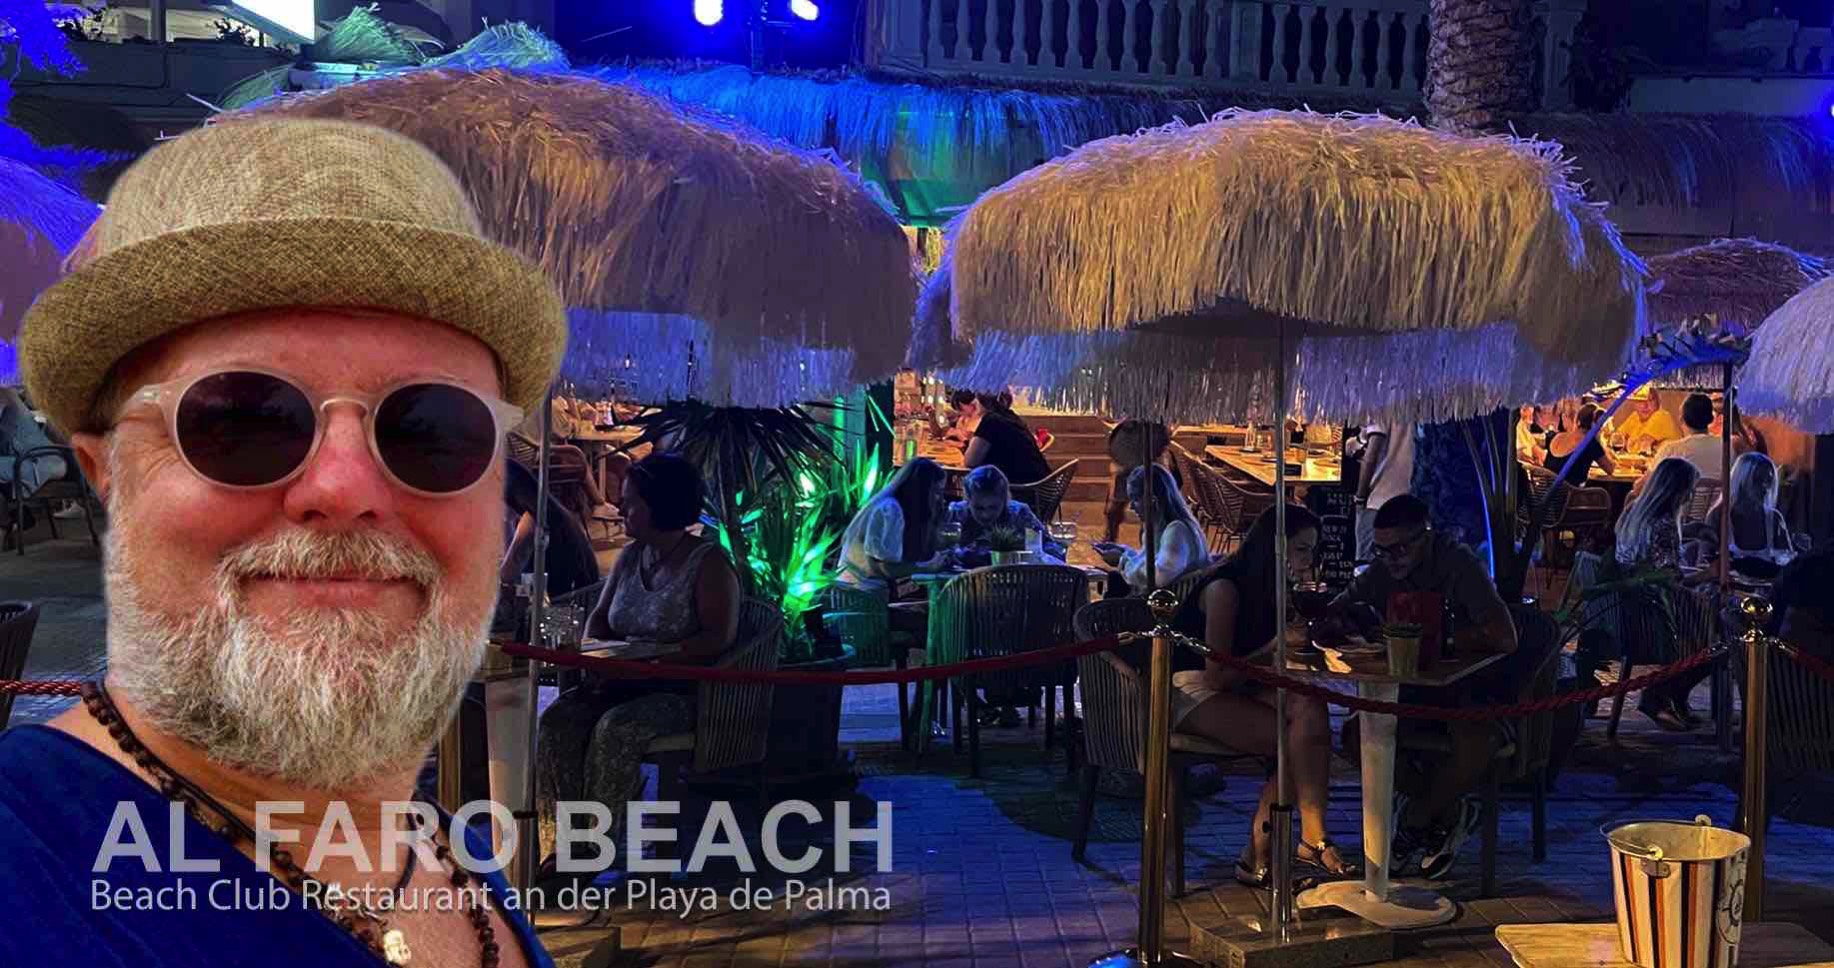 Beach Club Restaurant an der Playa de Palma